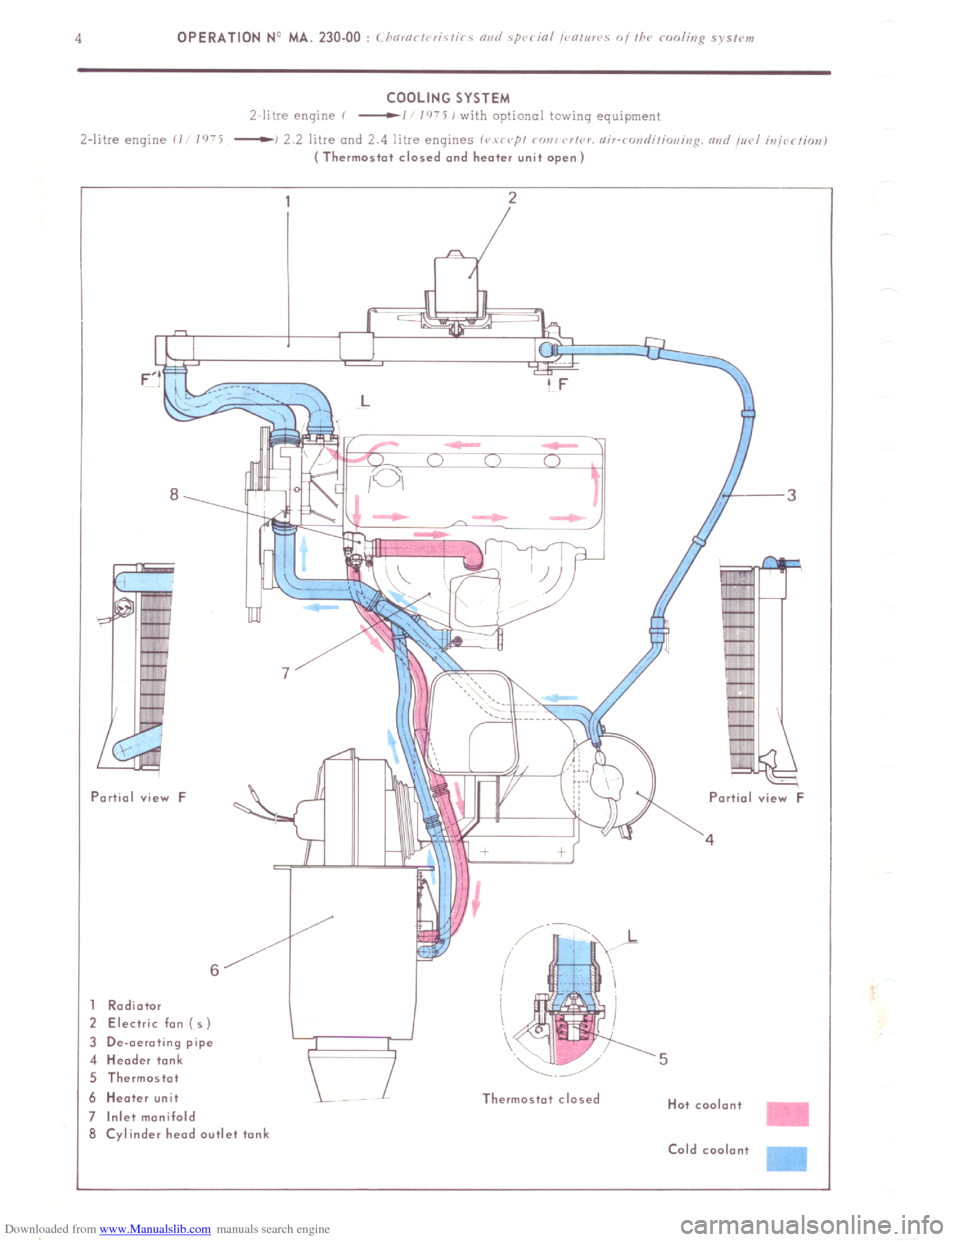 Citroen CX 1978 1.G Workshop Manual Downloaded from www.Manualslib.com manuals search engine - 
- 
‘F 
L 
Radiator 
! Electric fan ( 5) 
I De-oeroting pipe 
I Header tank 
i Thermostot 
I Heater unit 
Inlet manifold 
i Cylinder head o